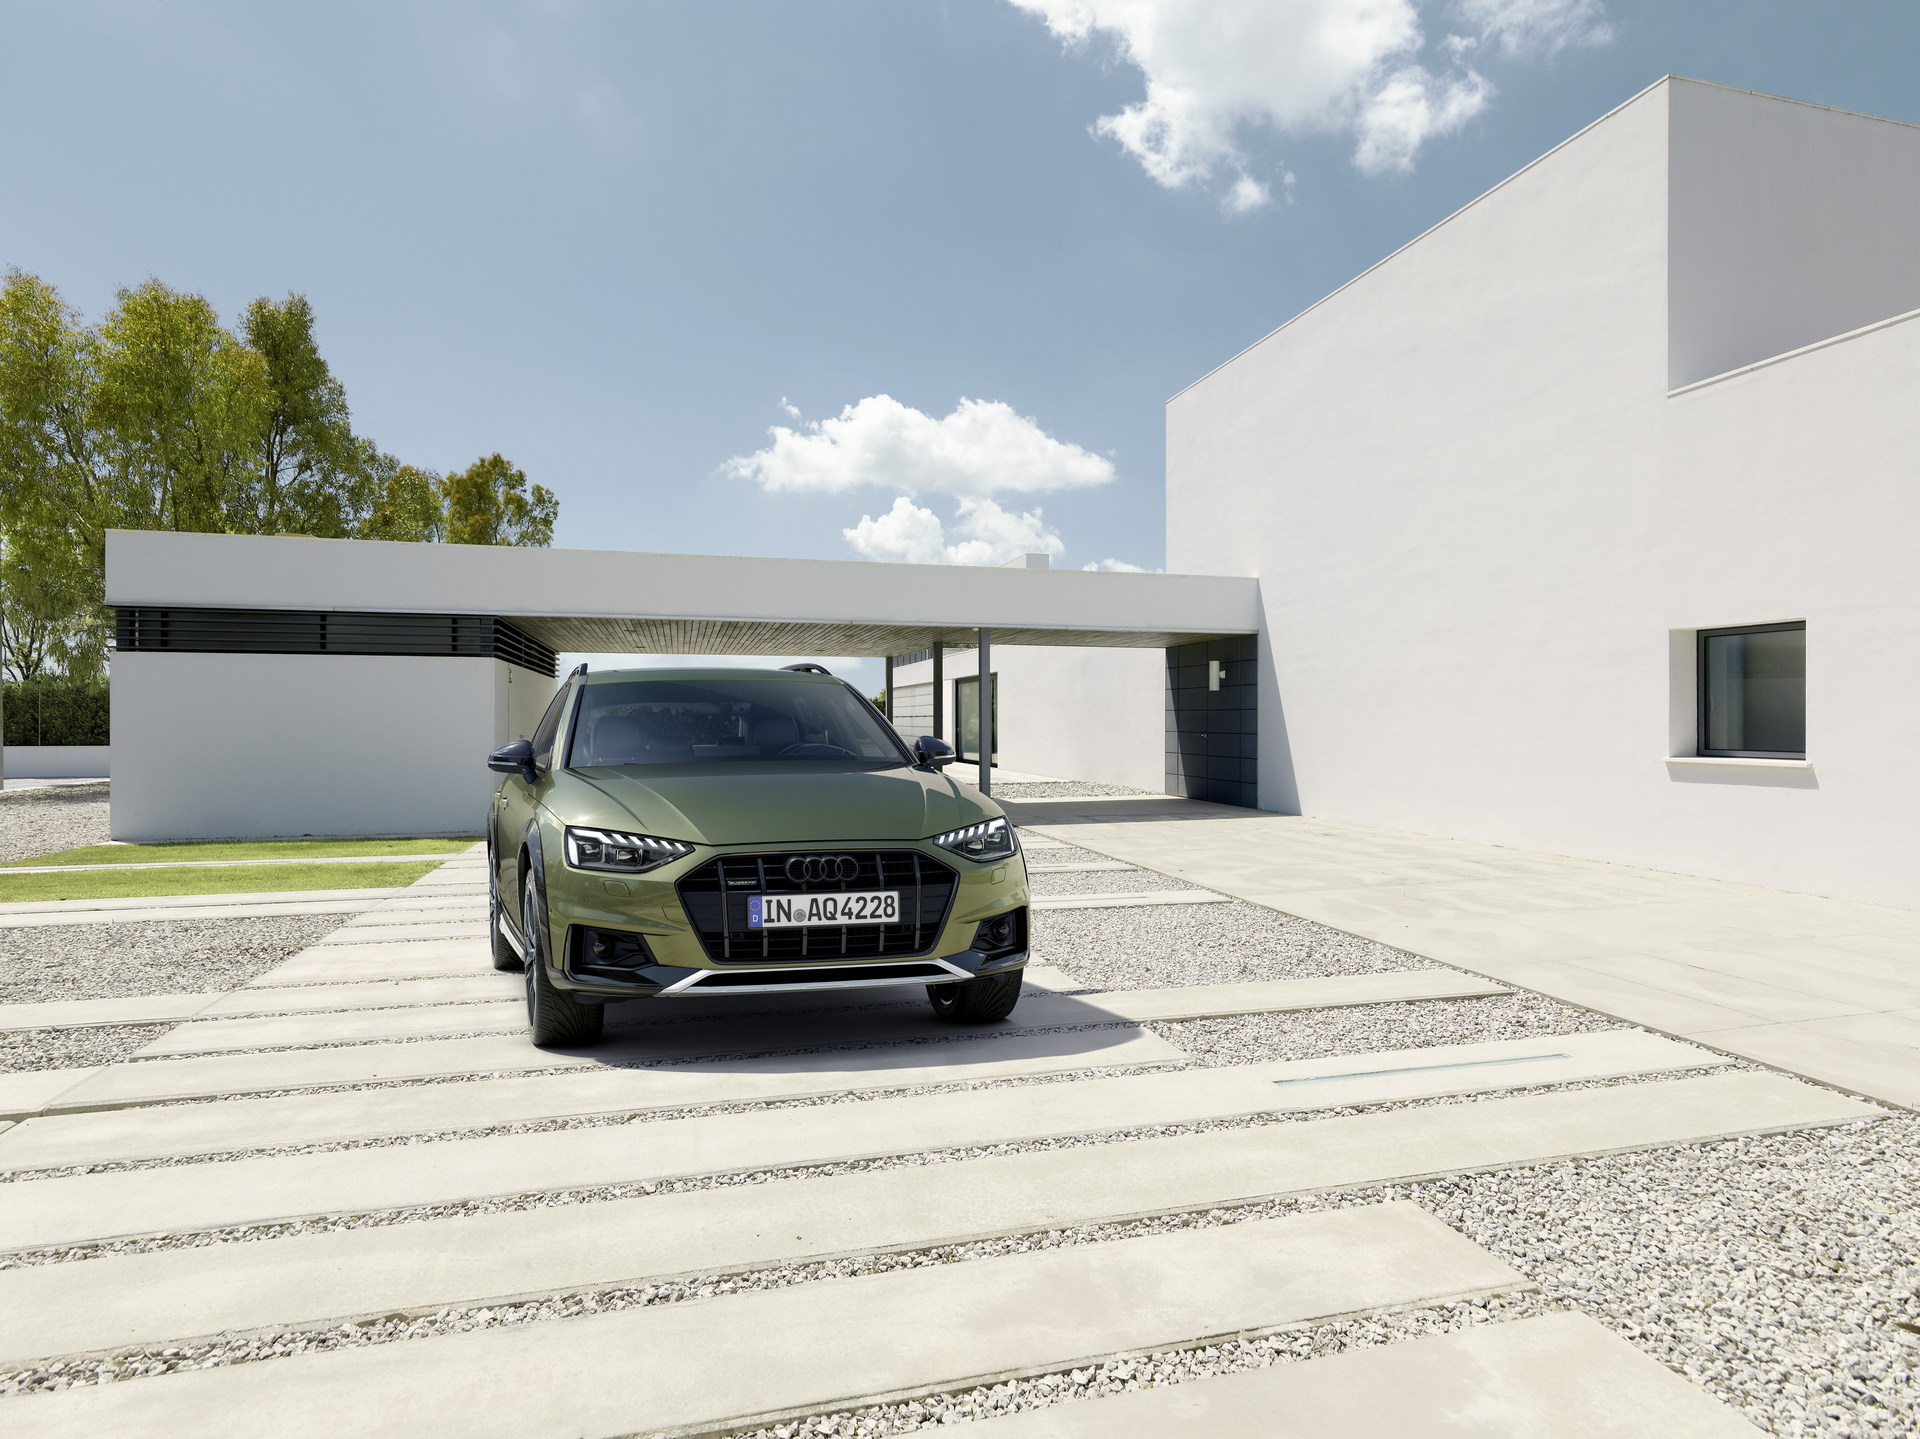 Audi A1 Allstreet resim galerisi (13.05.2022)